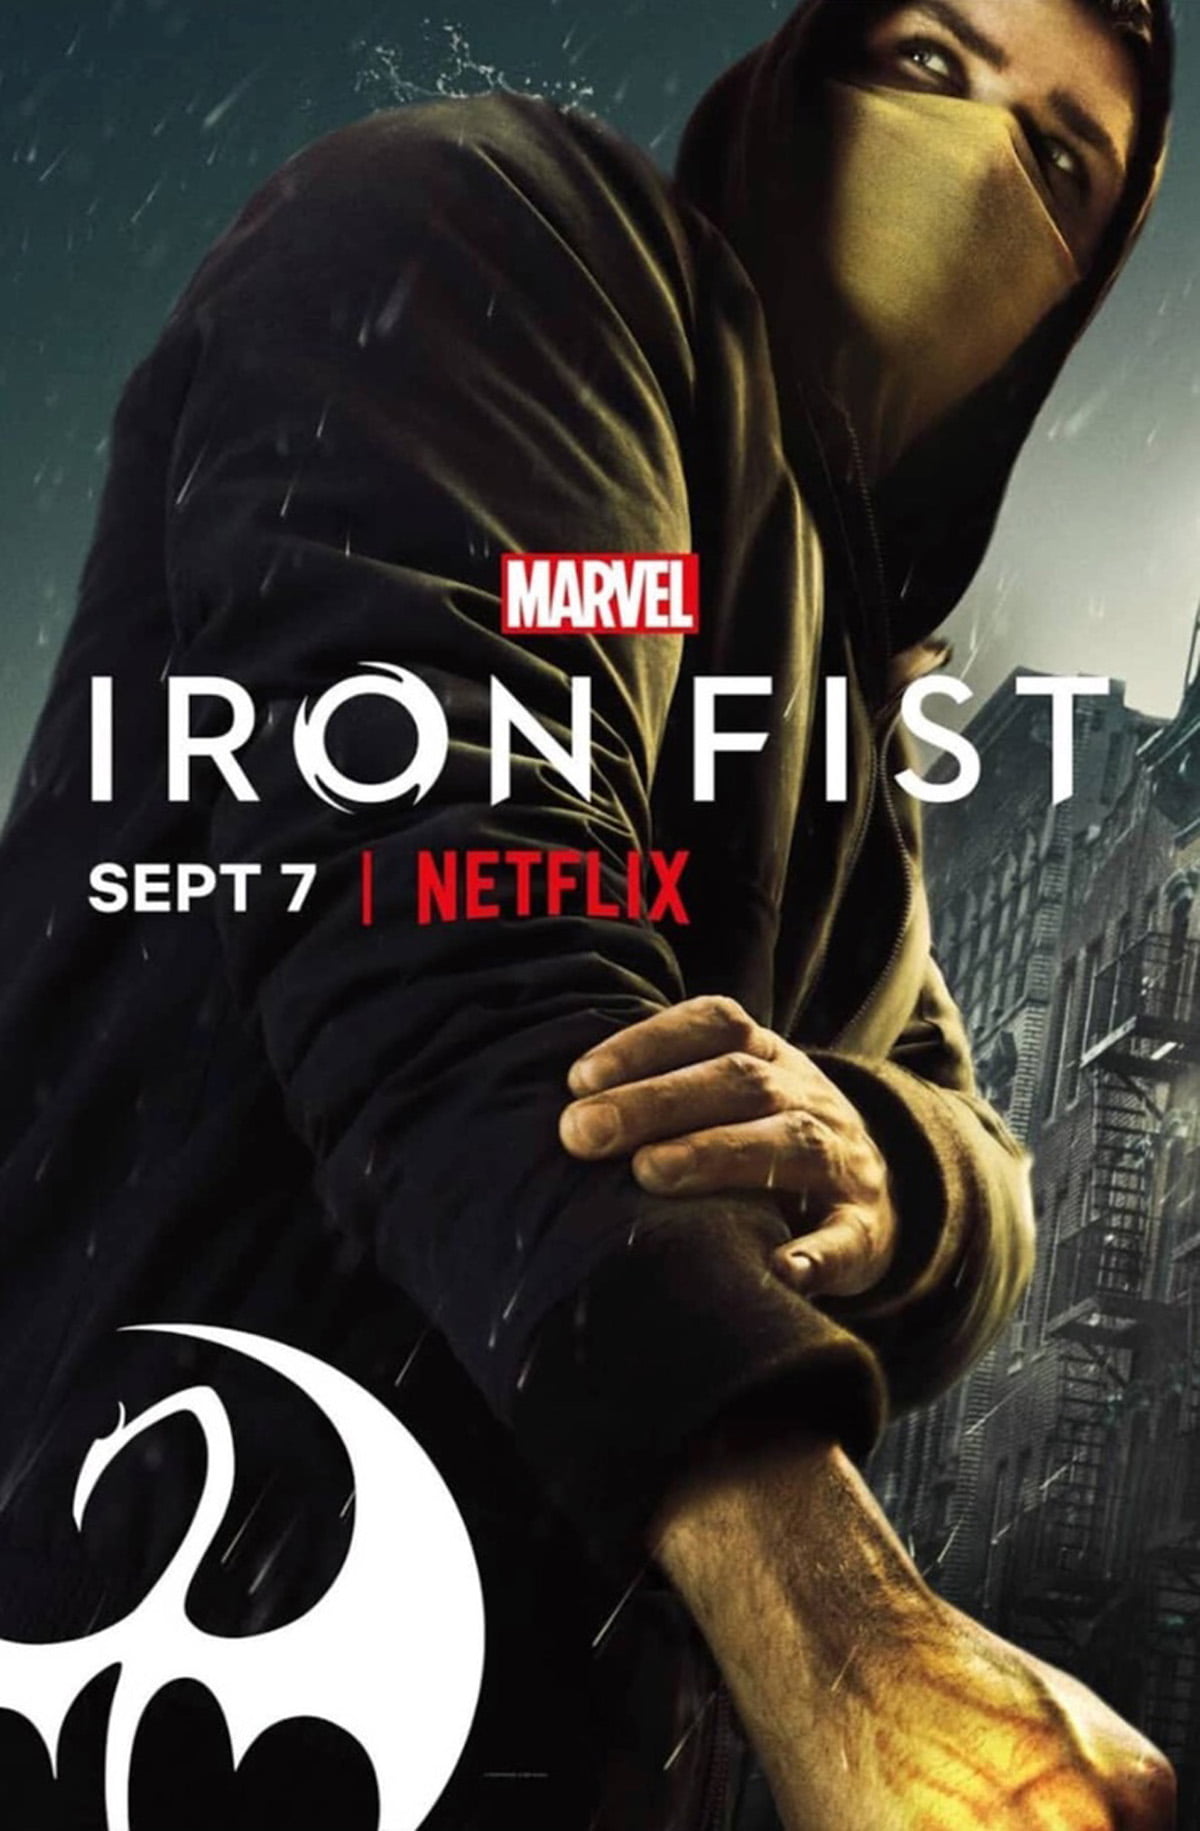 Plakat promujący serial Iron Fist